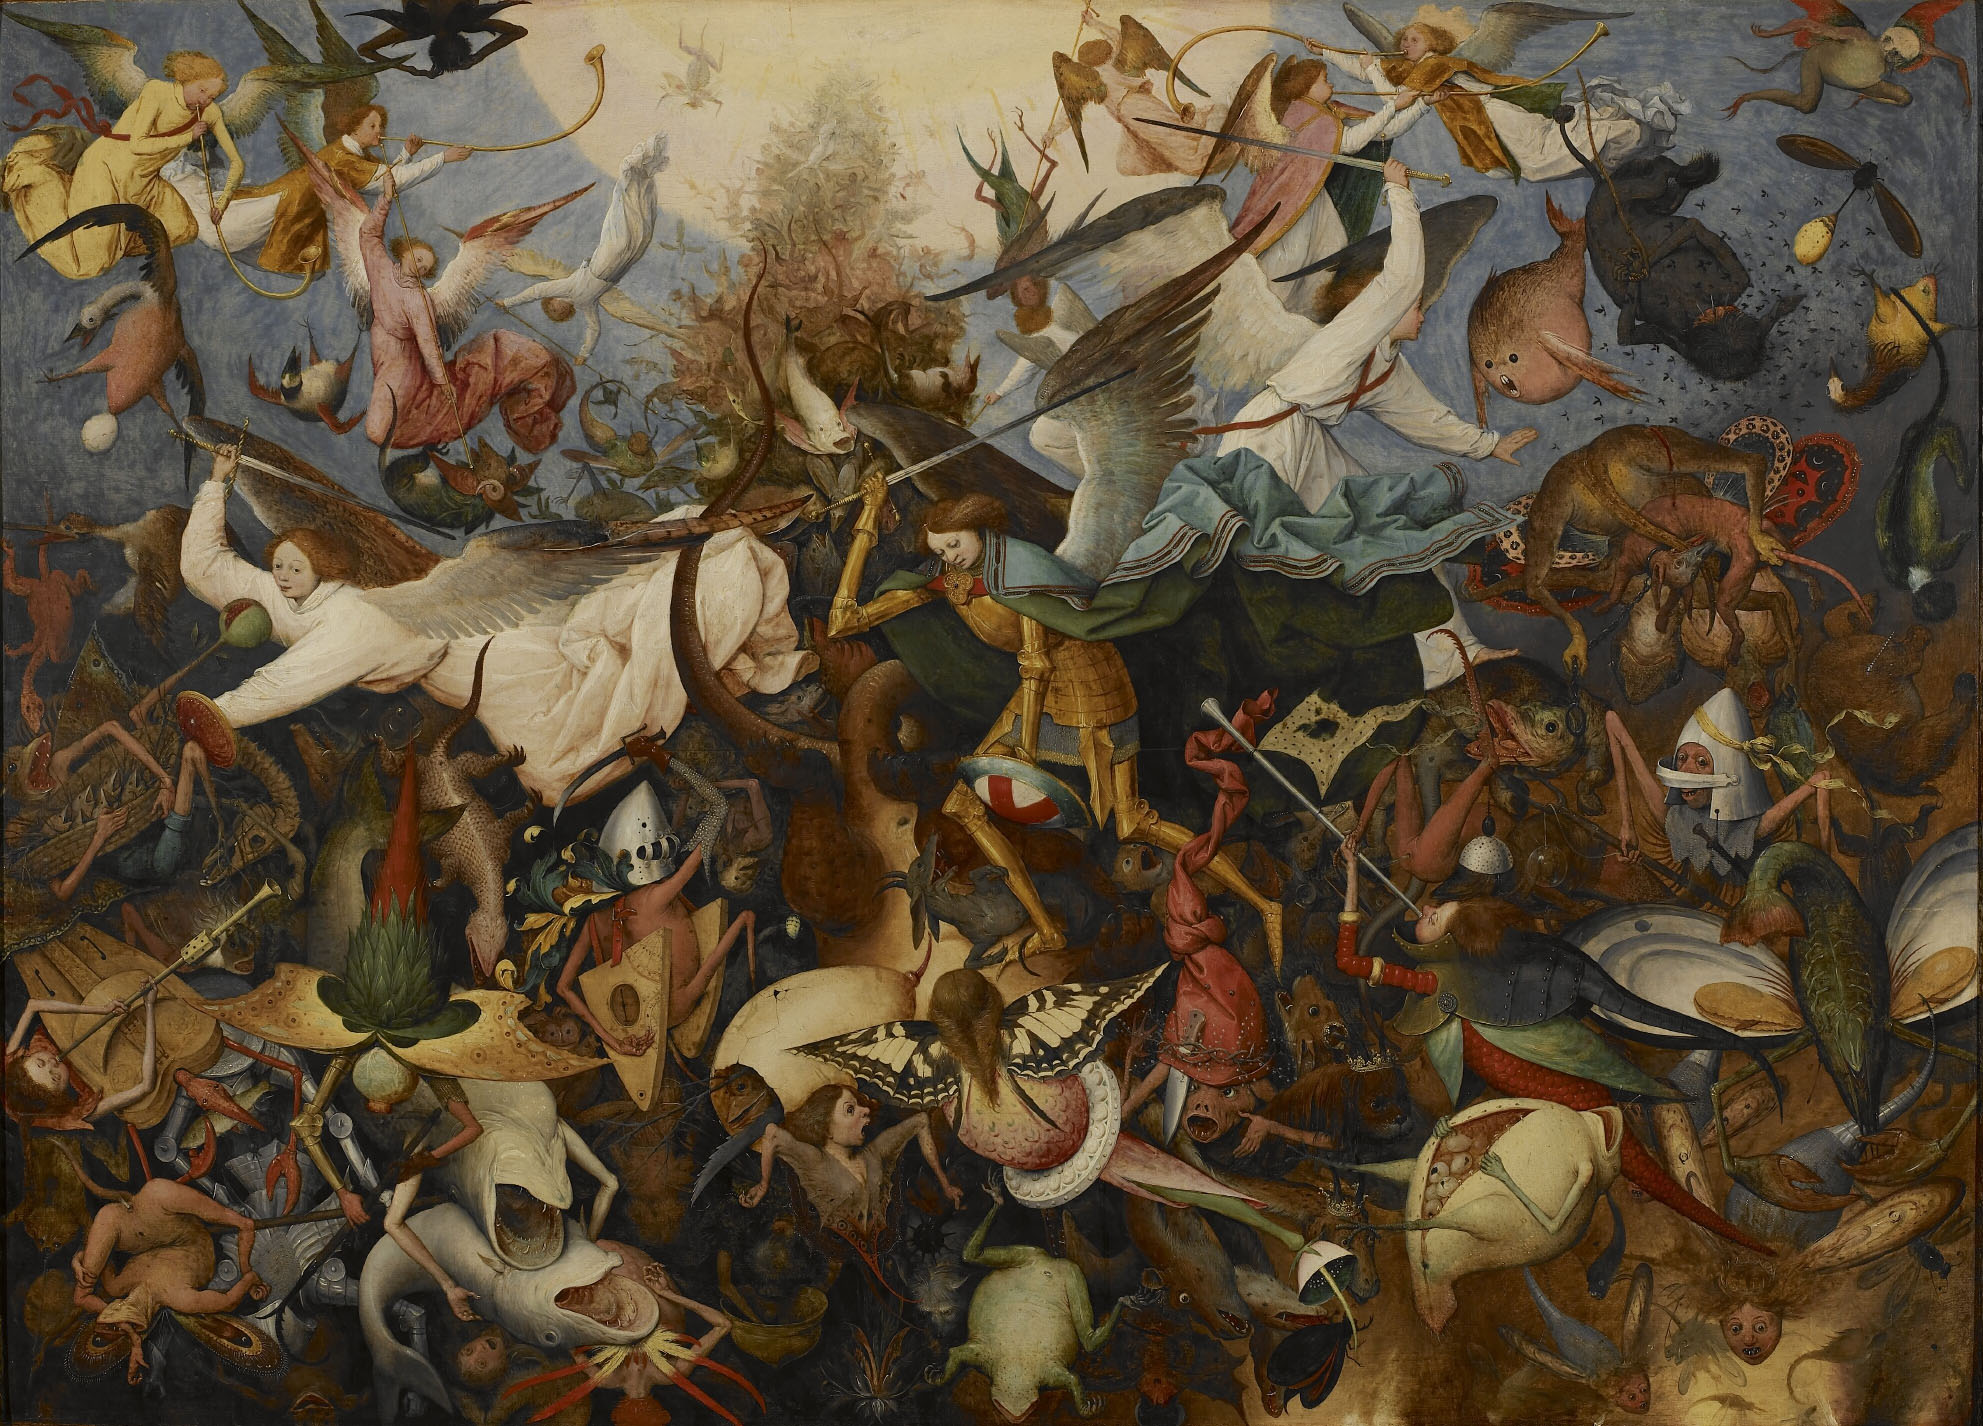 İsyankar Meleklerin Yenilişi (orig. "The Fall of the Rebel Angels") by Pieter Bruegel (baba) - 1562 - 162 x 117 cm 